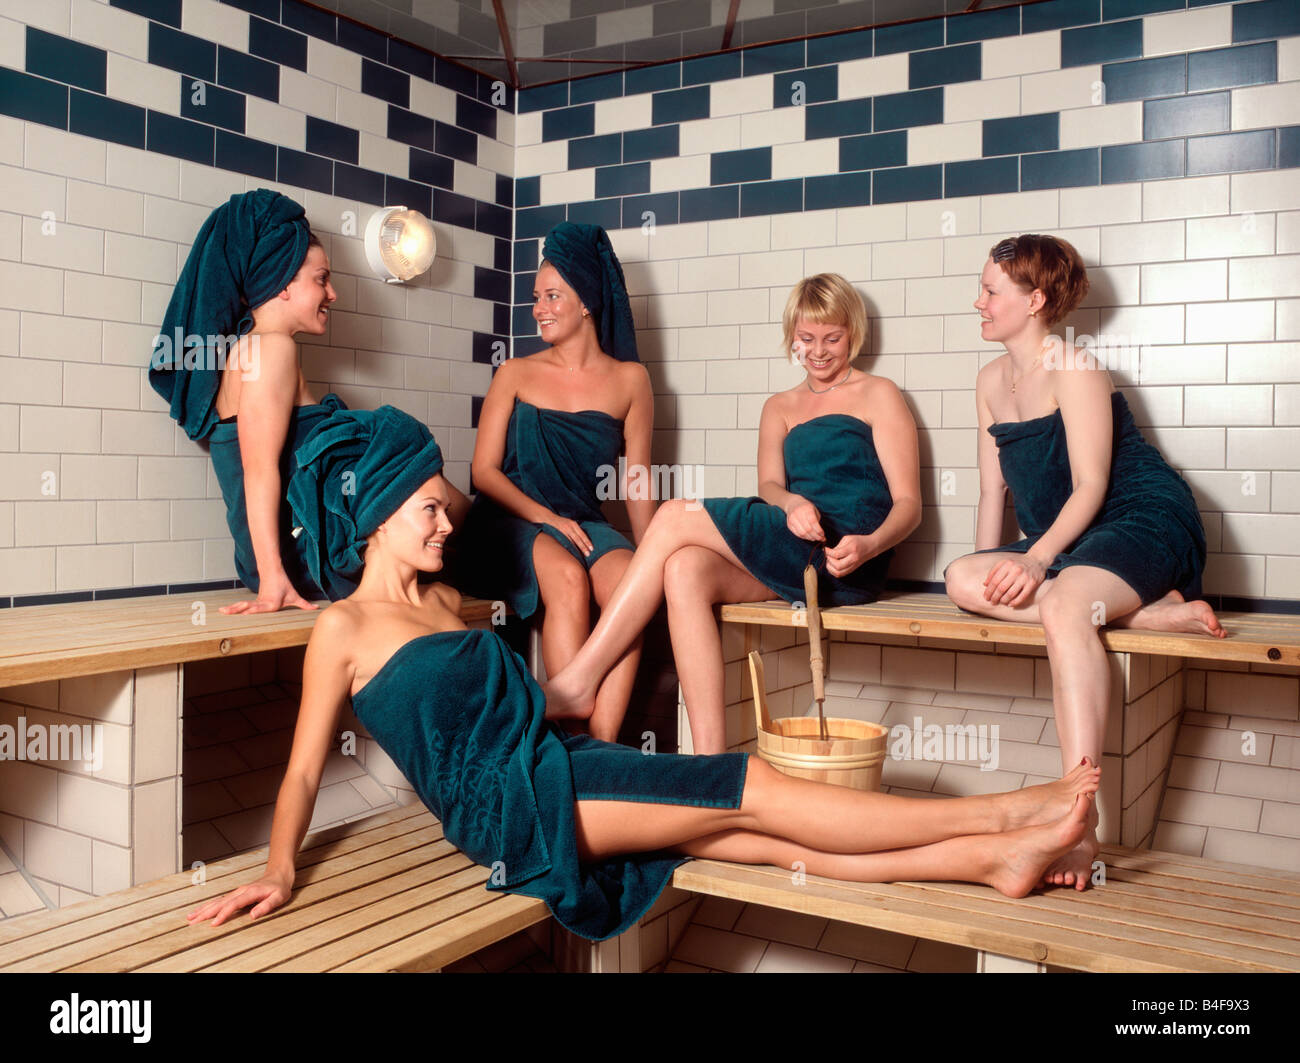 GROUP OF WOMEN IN SAUNA Stock Photo - Alamy.